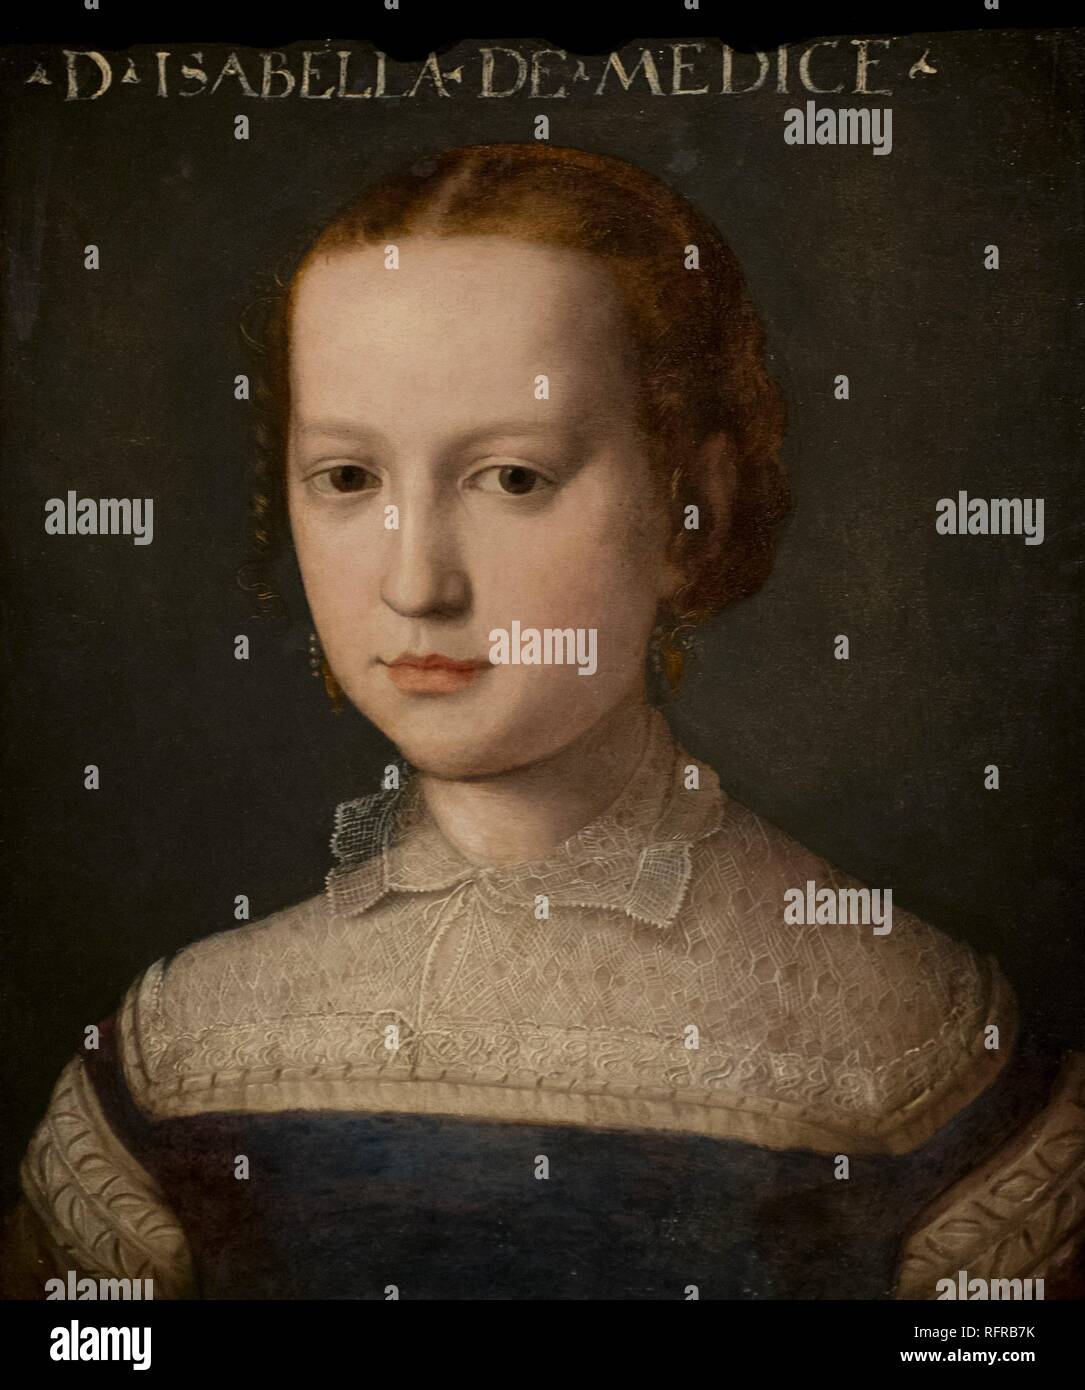 Isabella de Medici (1542-1576). Tochter von Cosimo ich de Medici. Porträt von Agnolo Bronzino (1503-1572). National Museum. Stockholm. Schweden. Stockfoto